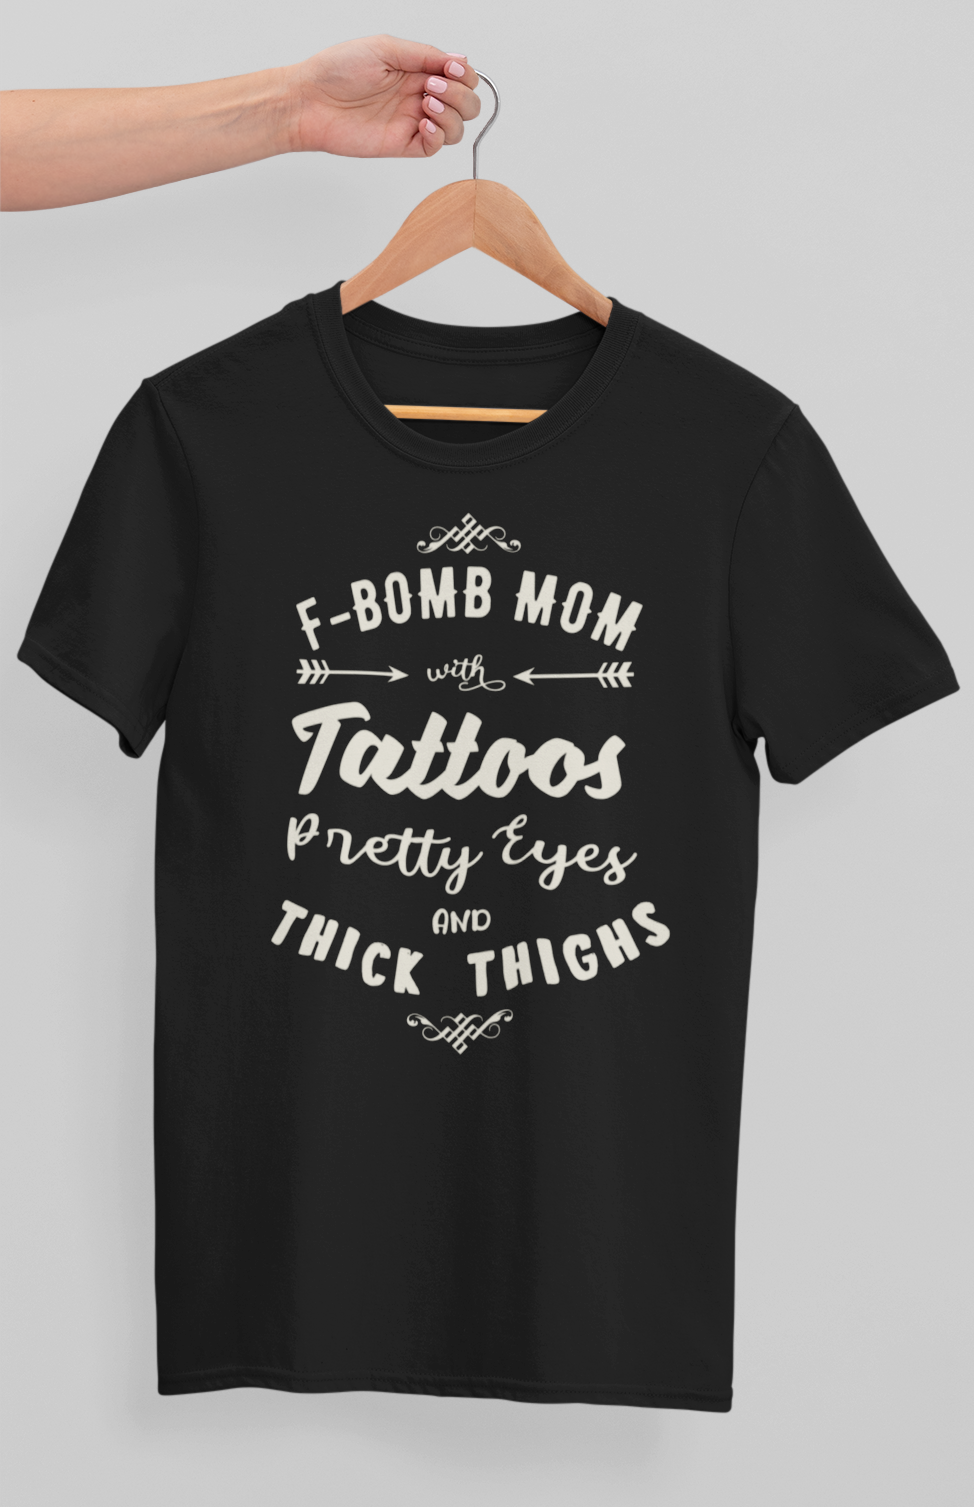 F-Bomb Mom Tattoos Pretty Eyes And Thick Thighs T-shirt